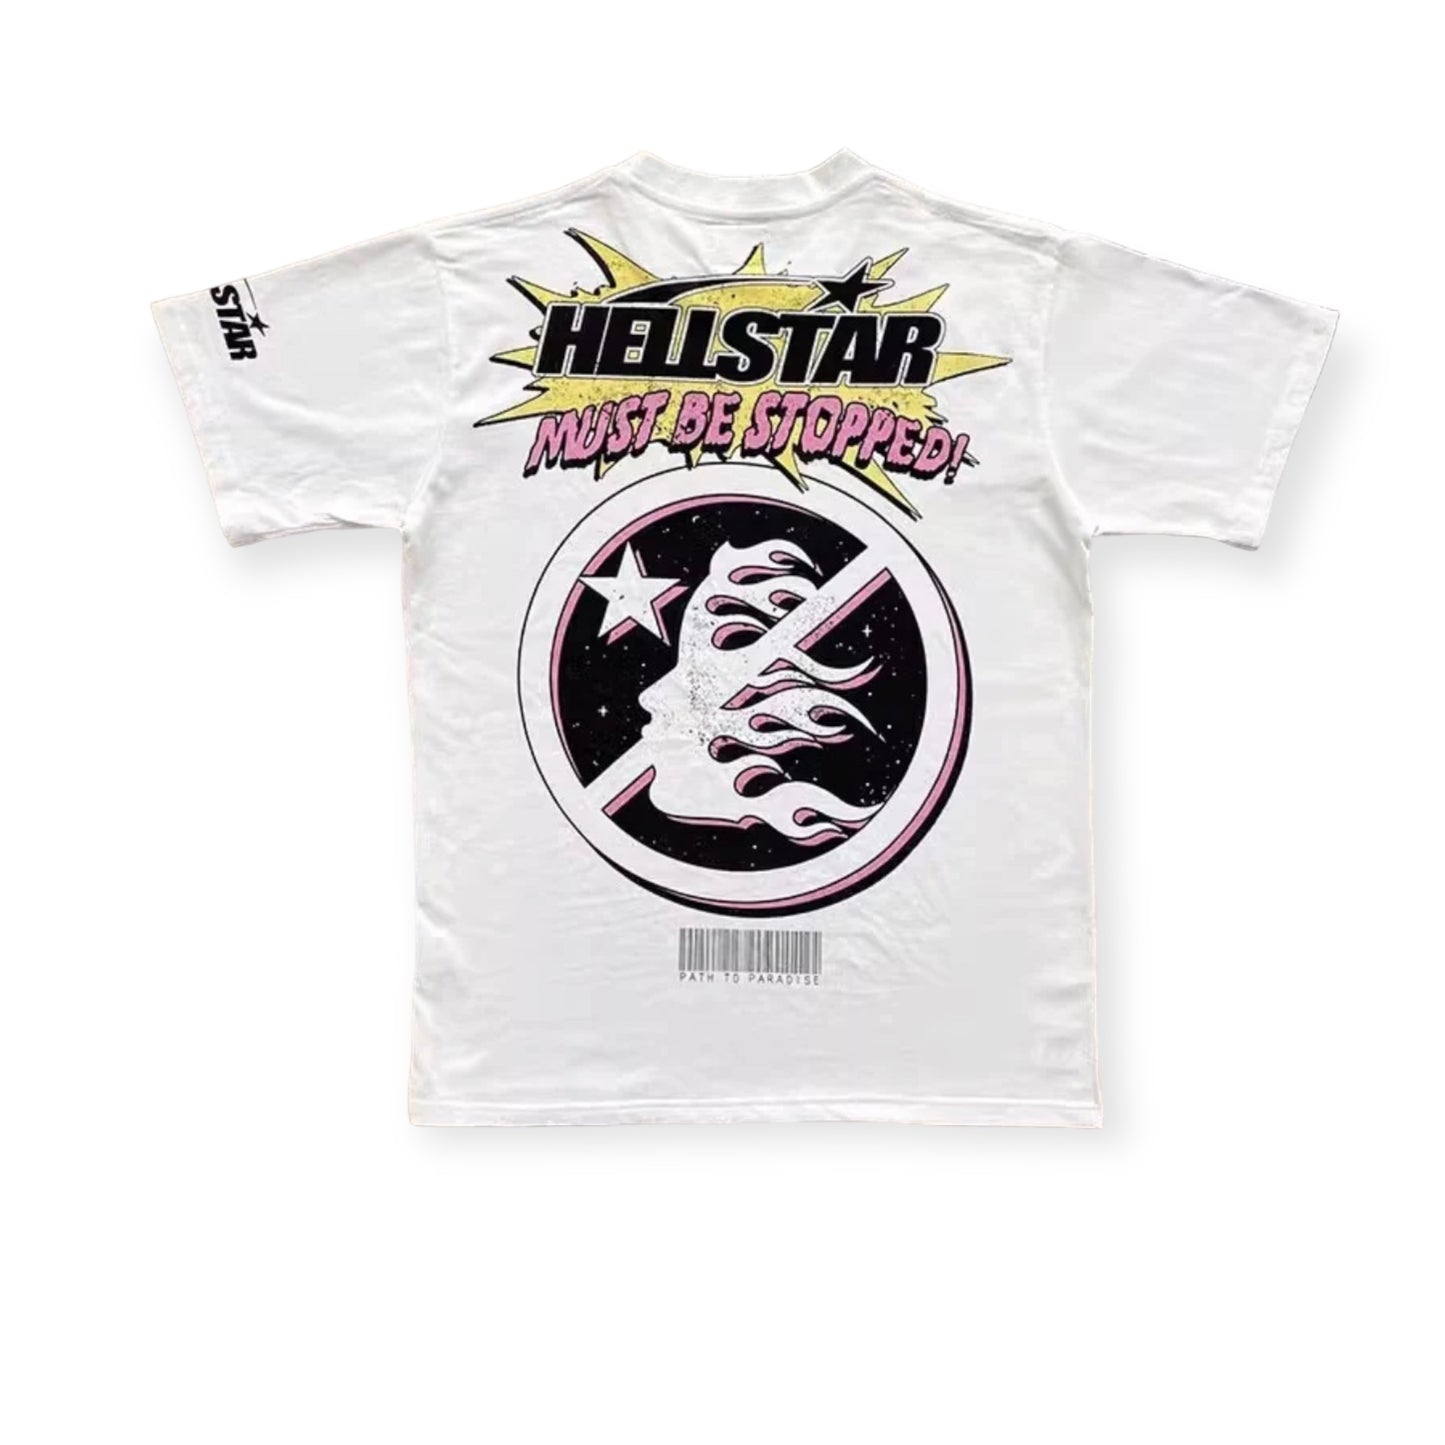 Brand New Hellstar Tee